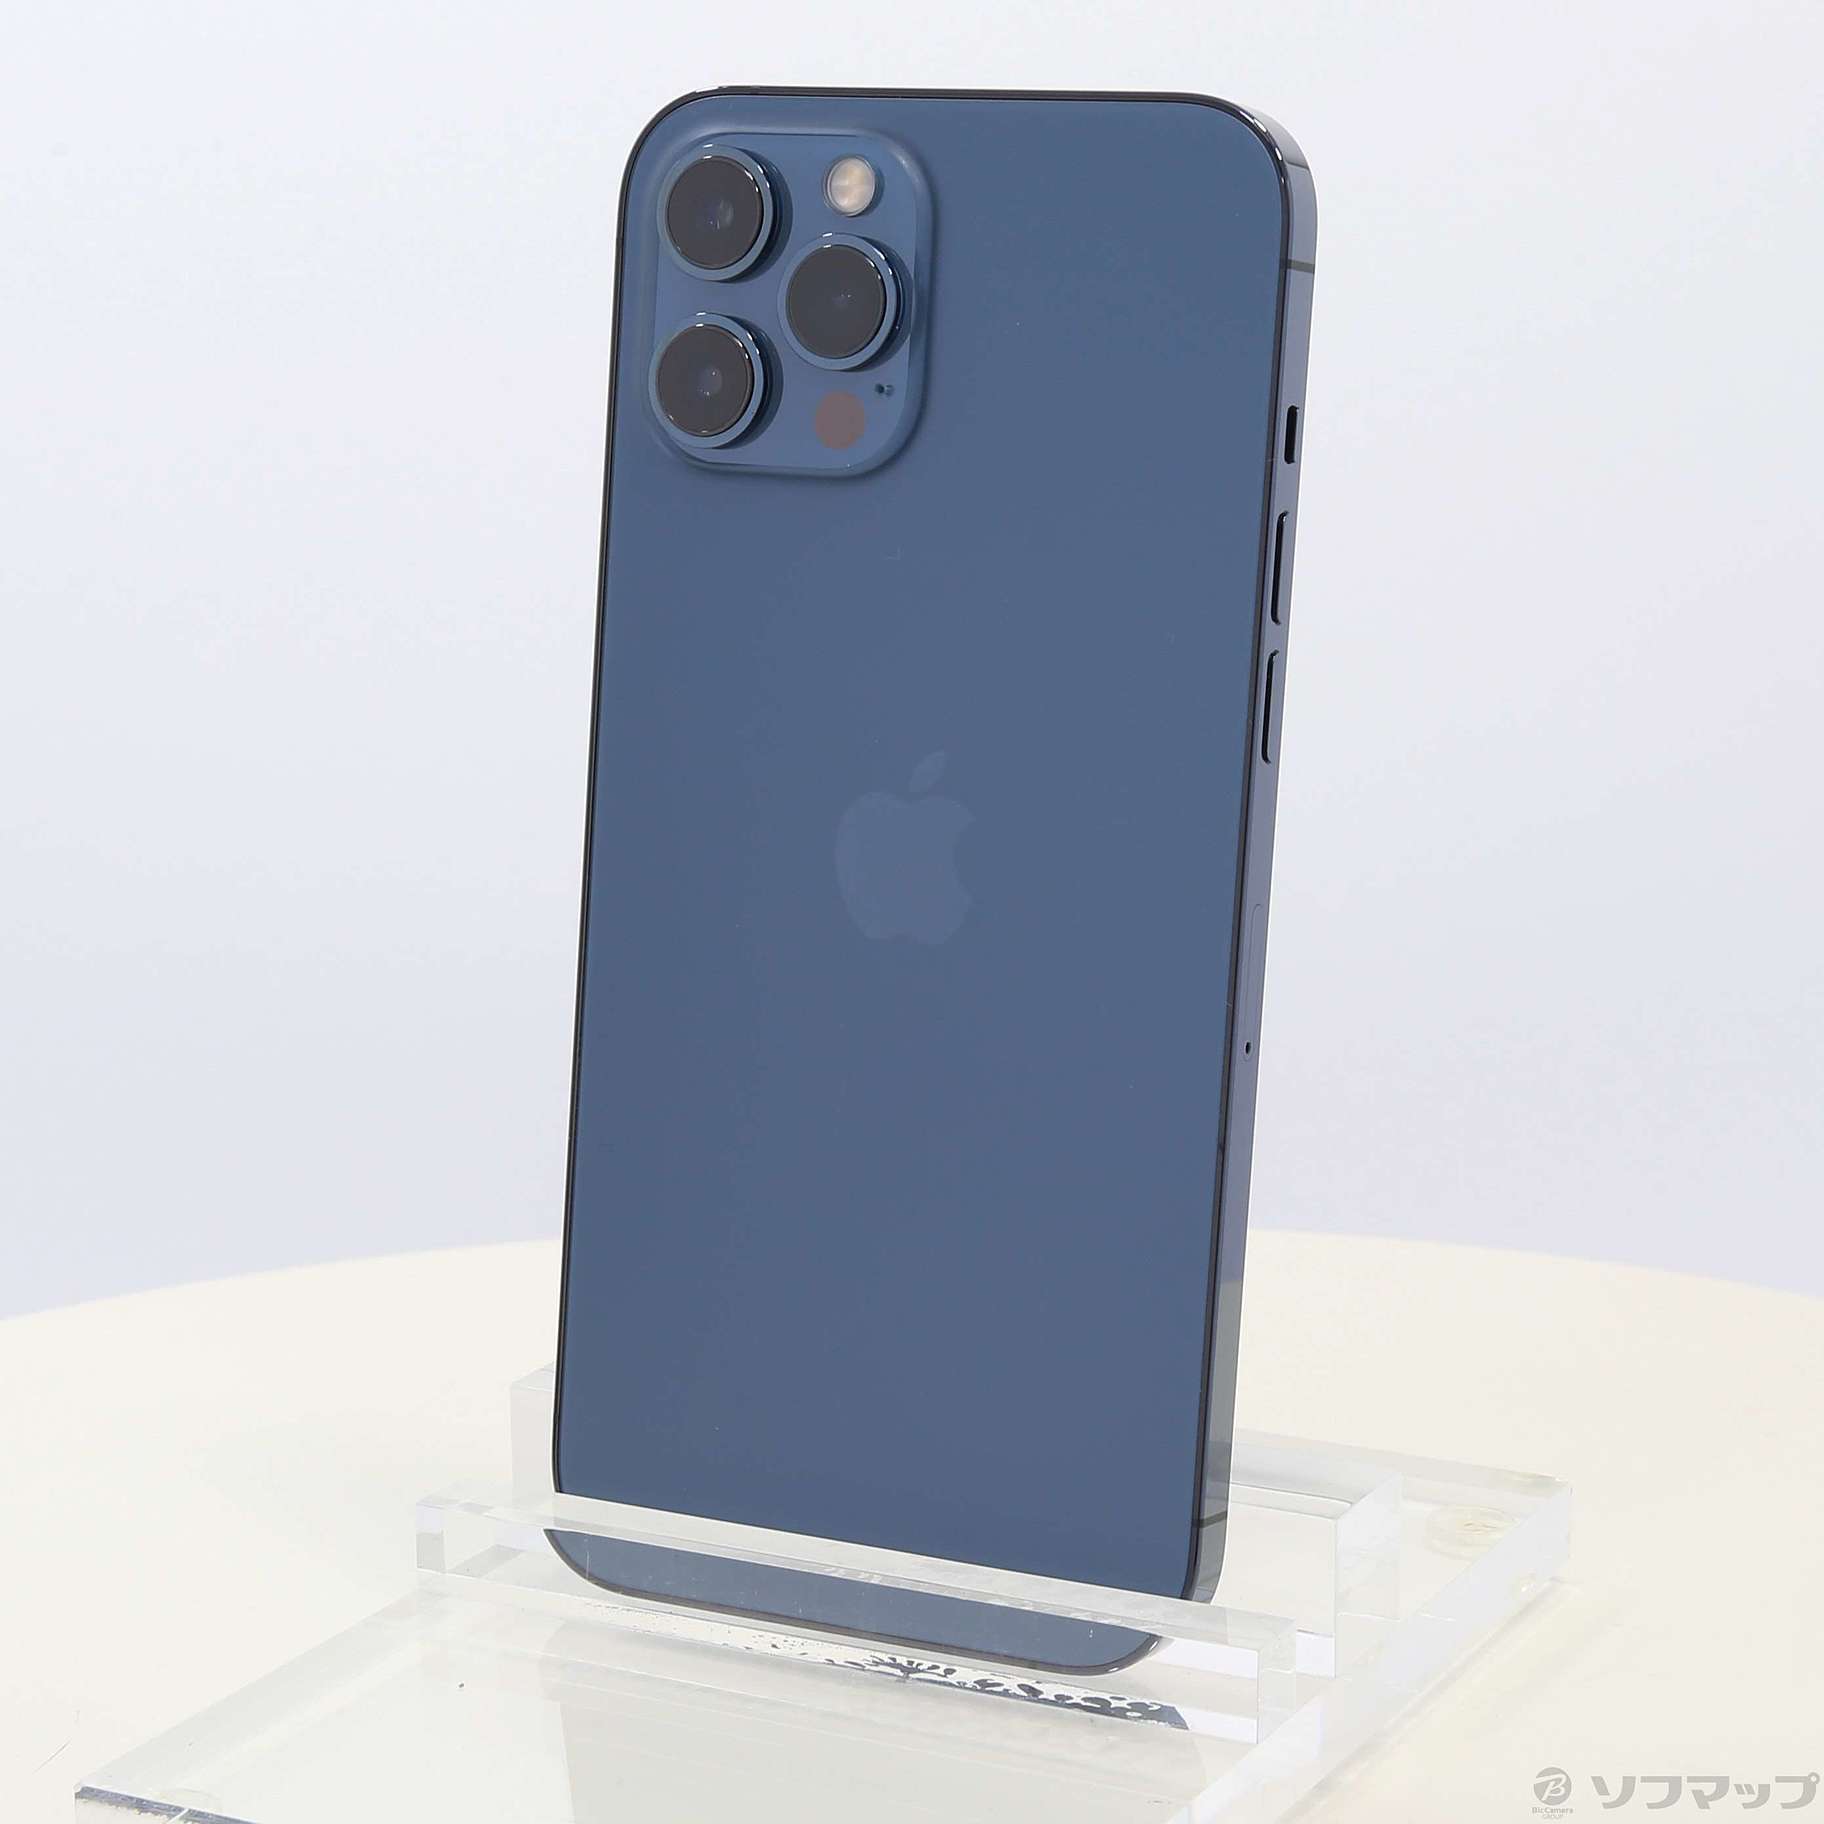 iPhone 12 PRO MAX 128GB パシフィックブルー - rehda.com